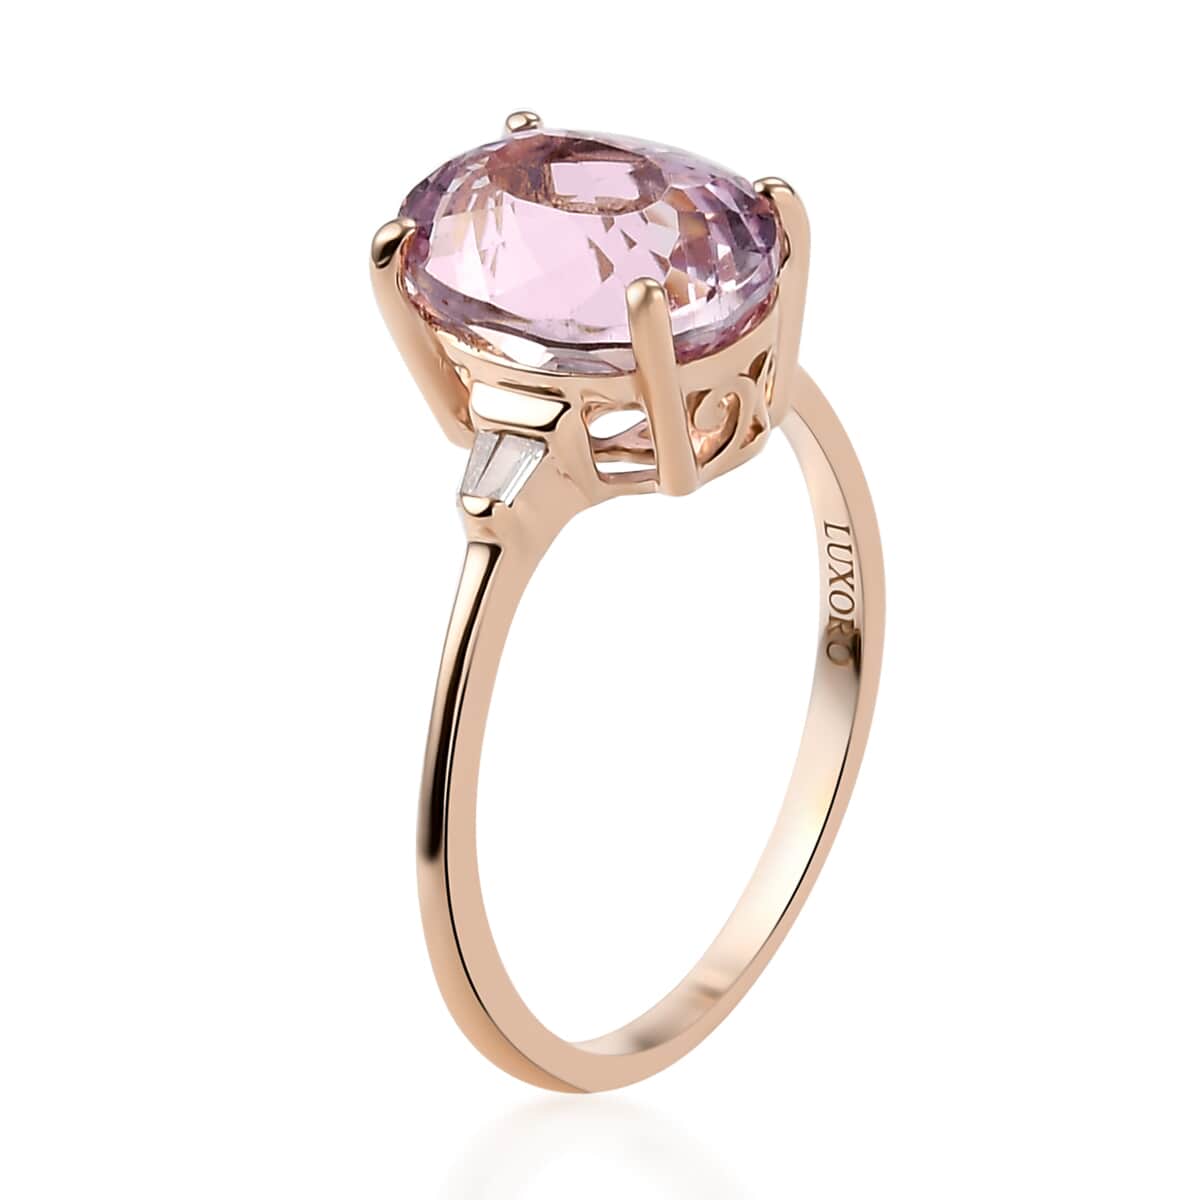 LUXORO 10K Rose Gold Premium Kunzite and Diamond Accent Ring (Size 9.0) 2 Grams 3.60 ctw image number 3